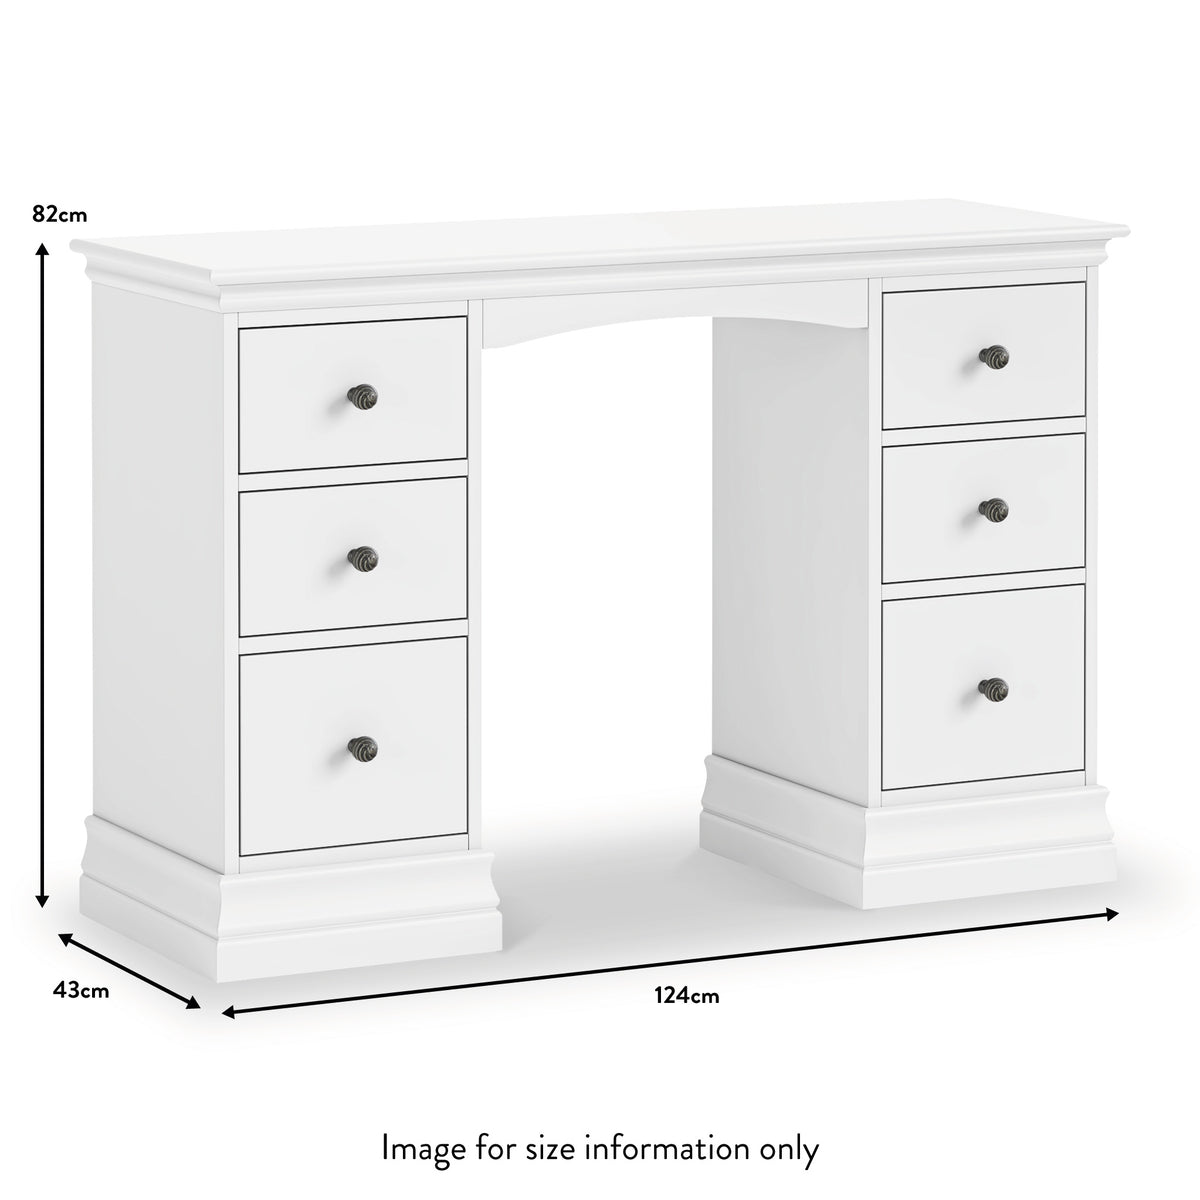 Porter White 6 Drawer Storage Dressing Table dimensions